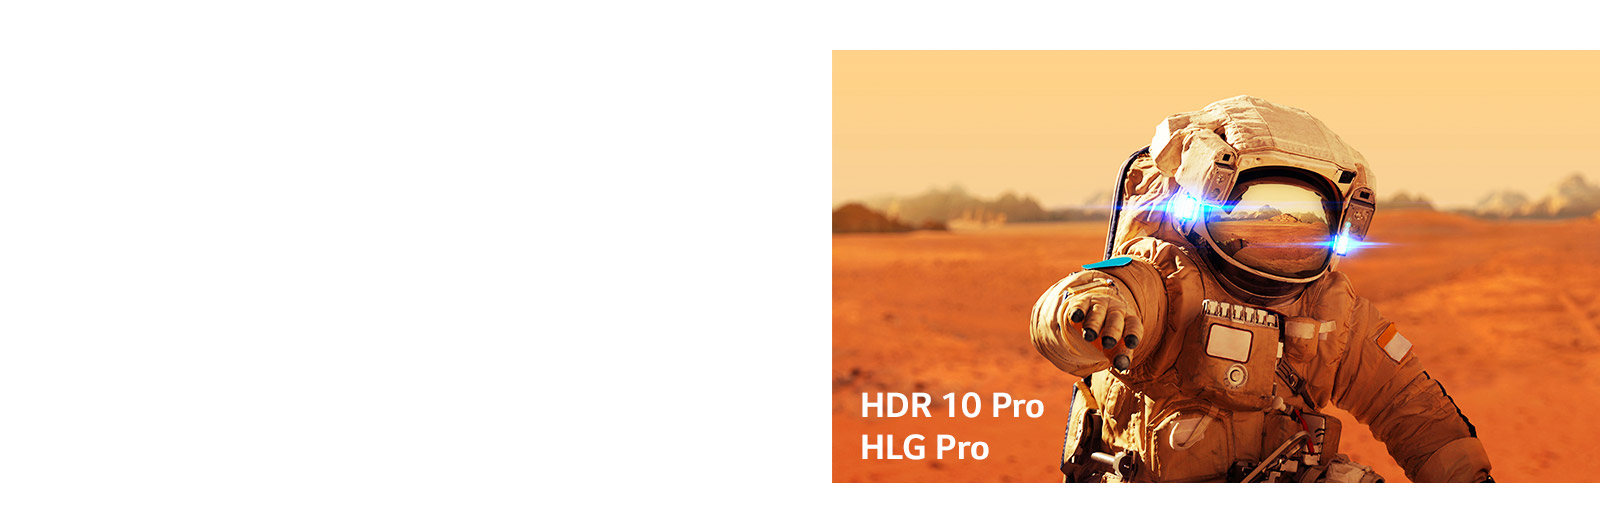 Marvel Iron Man, intertitres avec les logos HLG pro et HDR 10 Pro